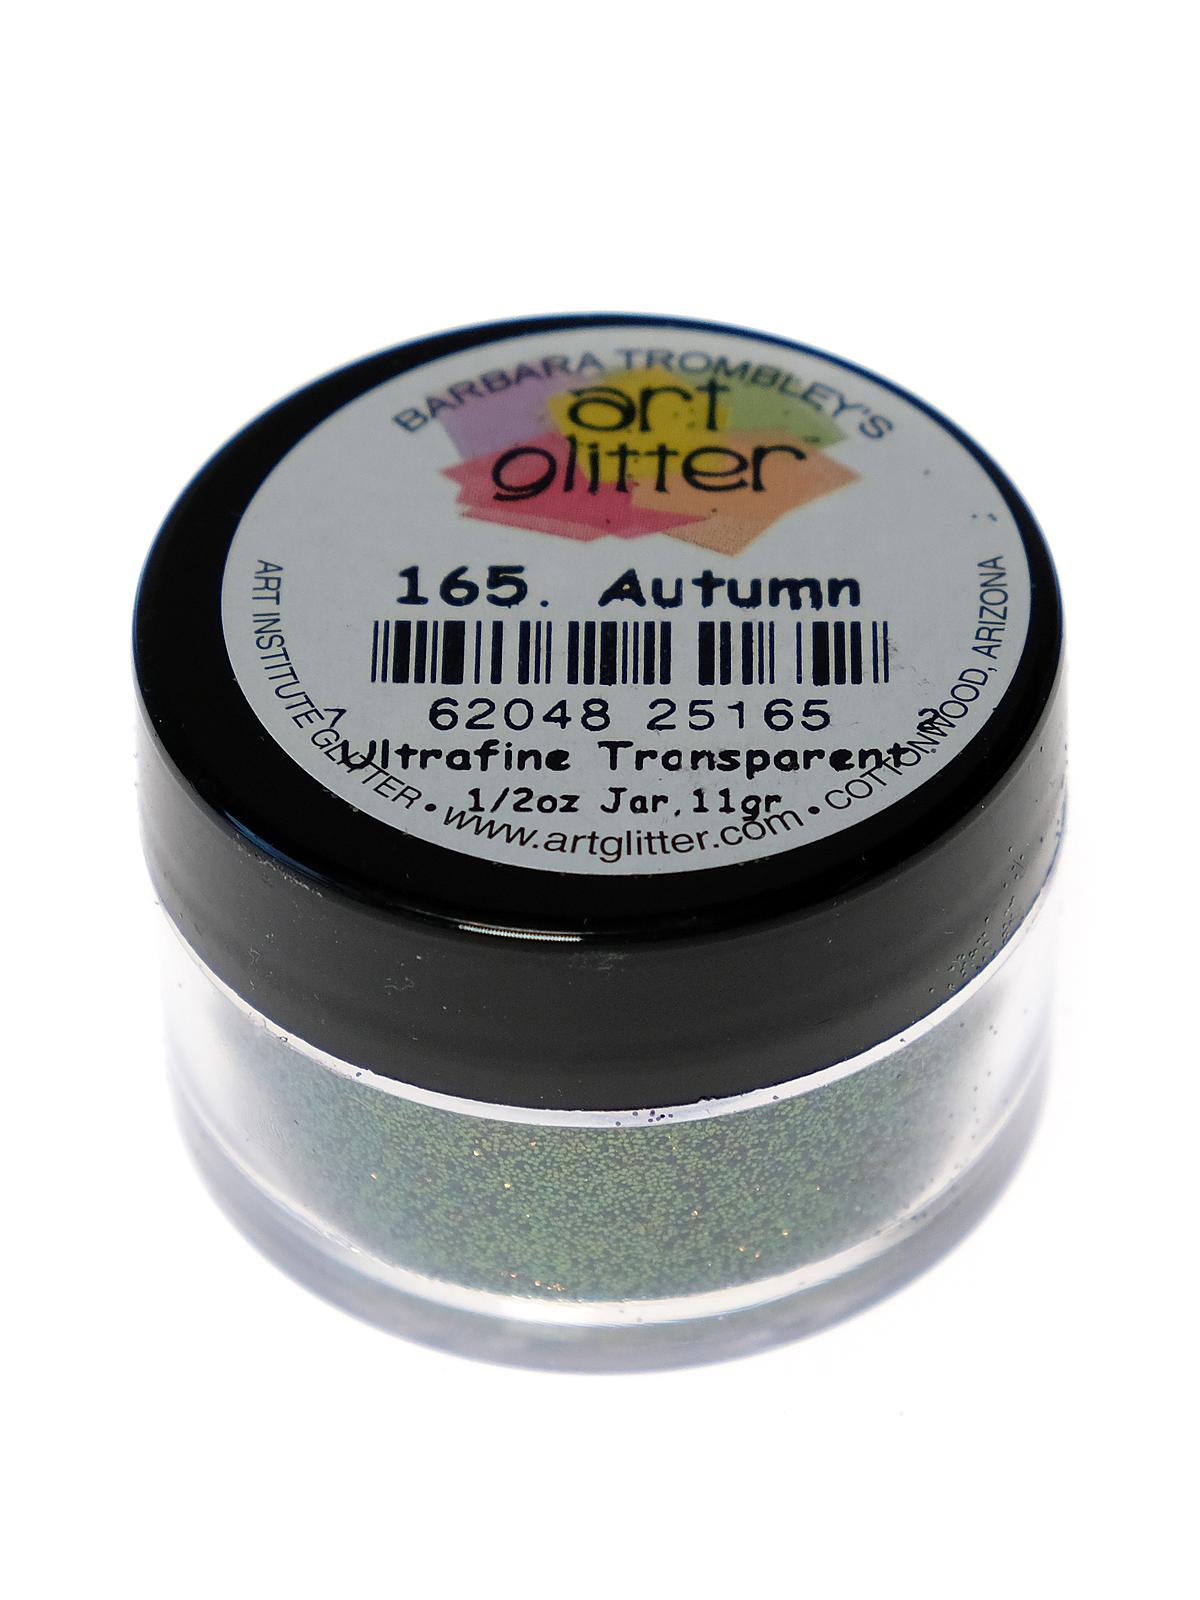 Ultrafine Transparent Glitter Autumn 1 2 Oz. Jar